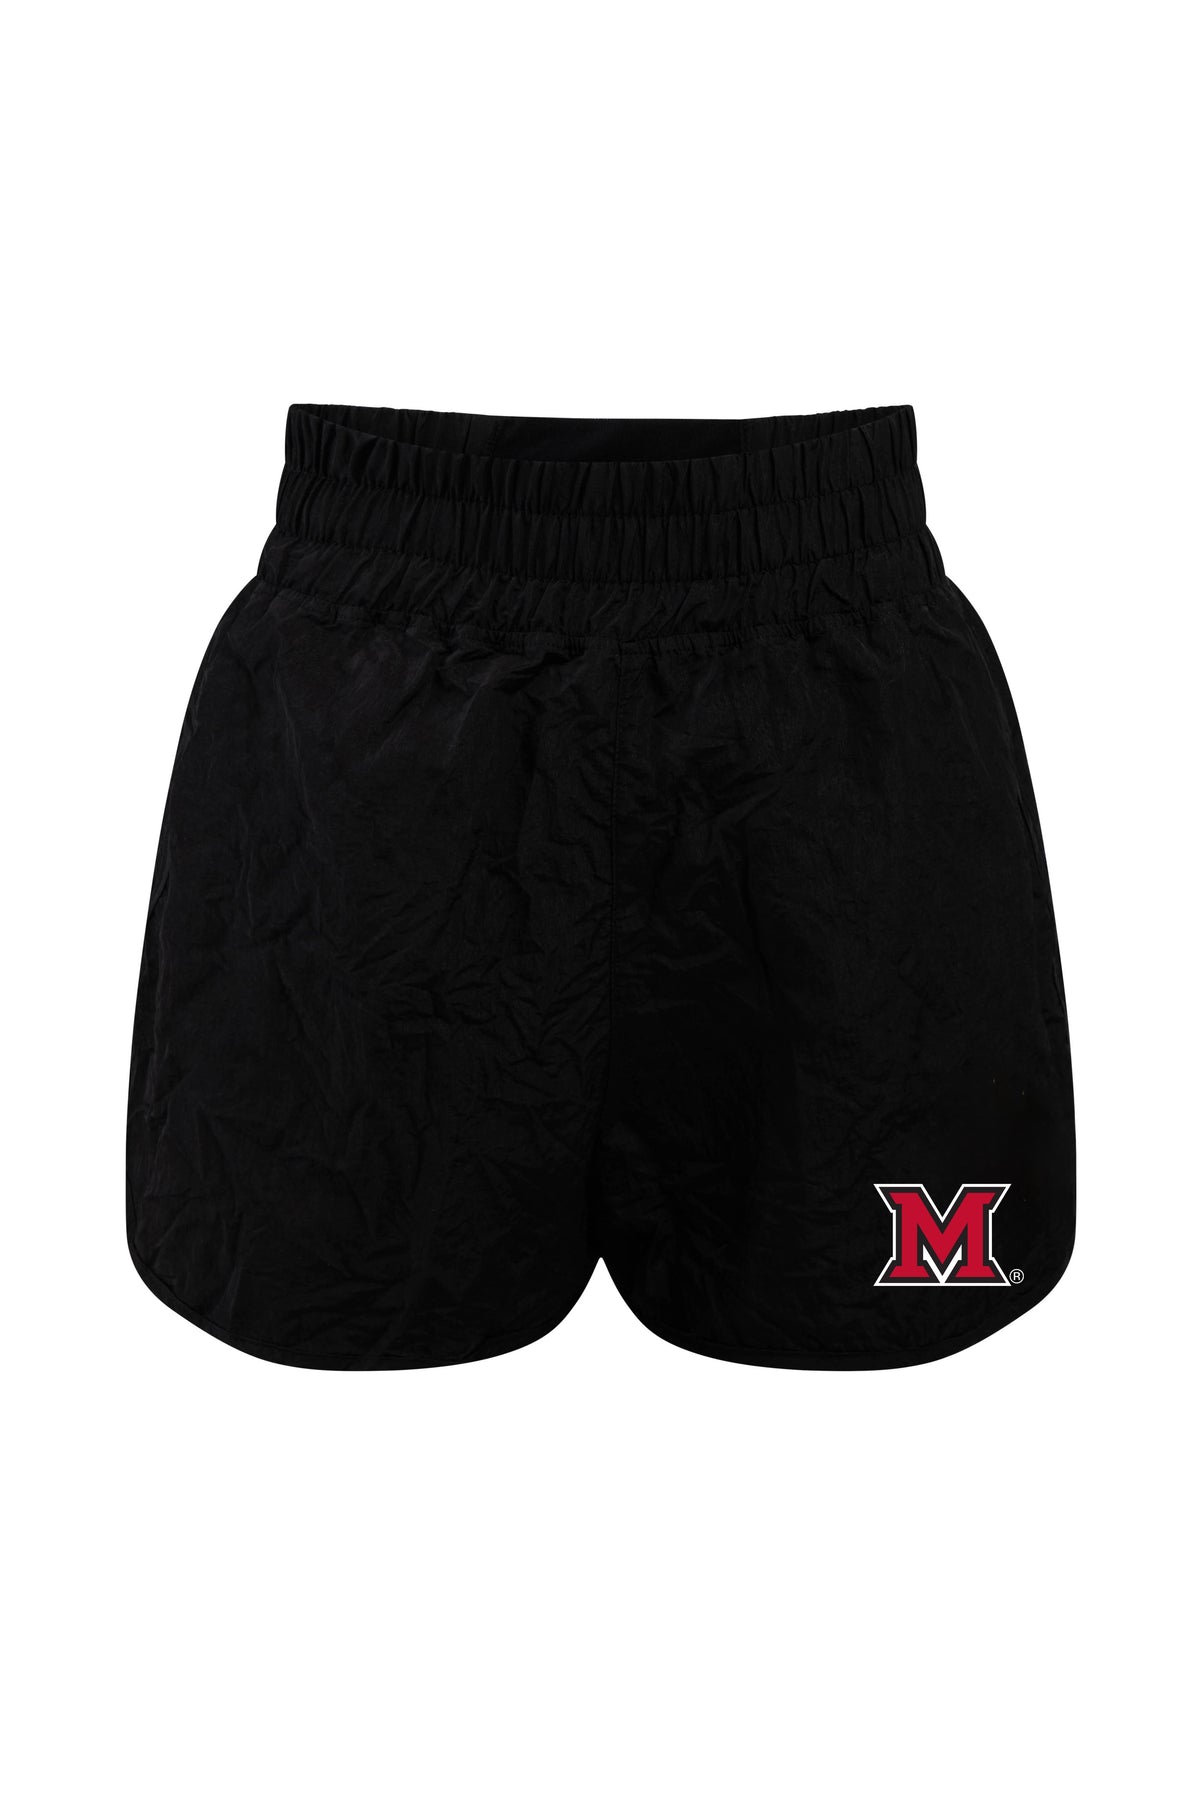 Miami University Boxer Short